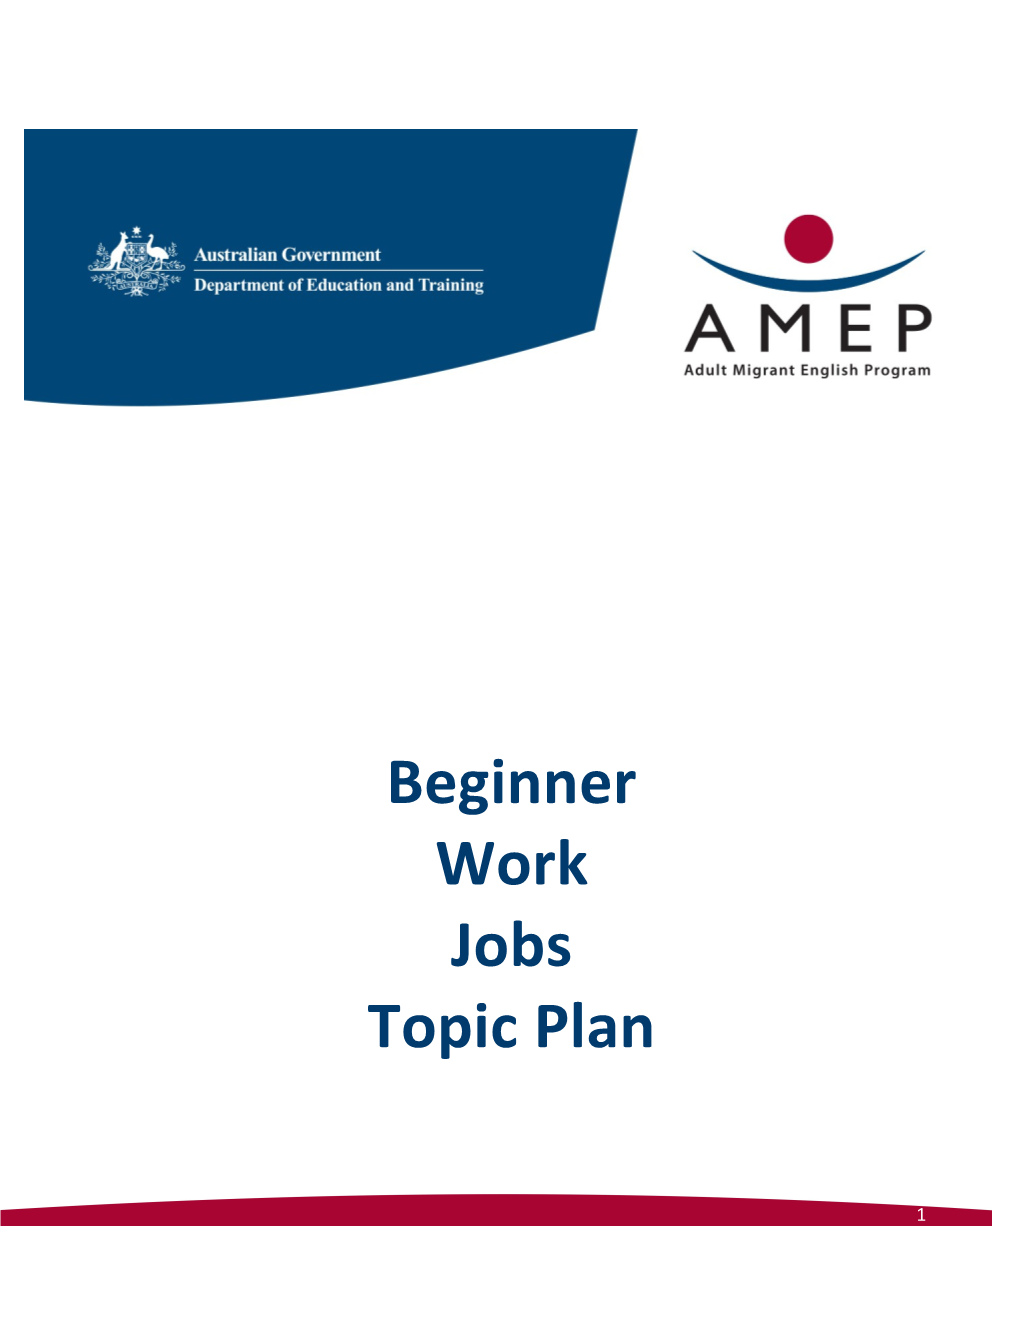 Beginner Work Jobs Topic Plan